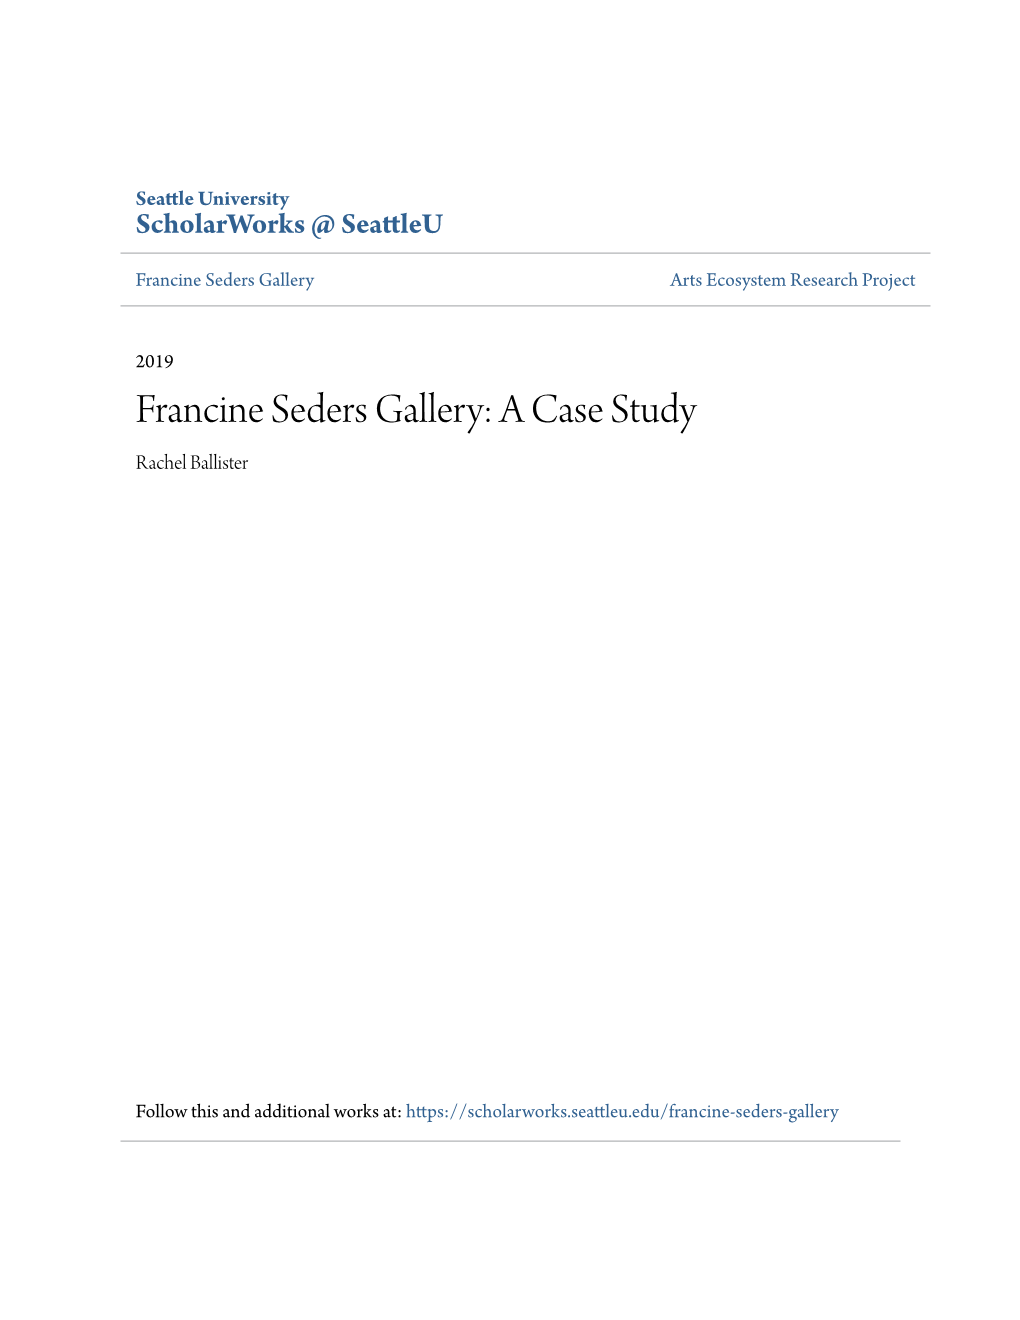 Francine Seders Gallery: a Case Study Rachel Ballister